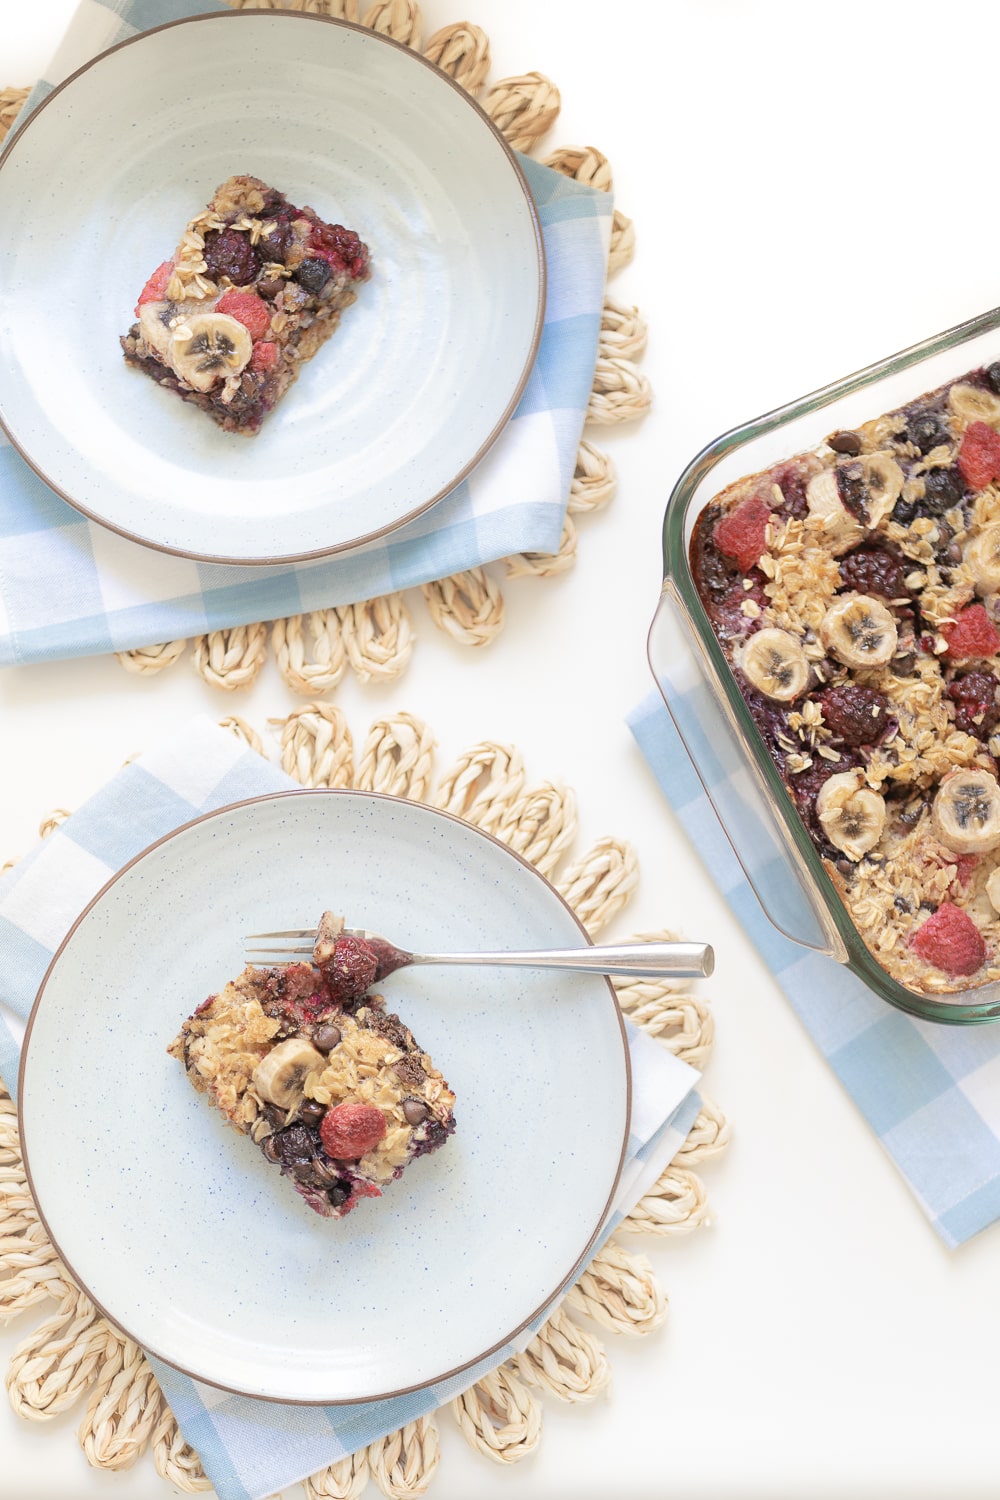 Baked oatmeal bars recipe by blogger Stephanie Ziajka on Diary of a Debutante